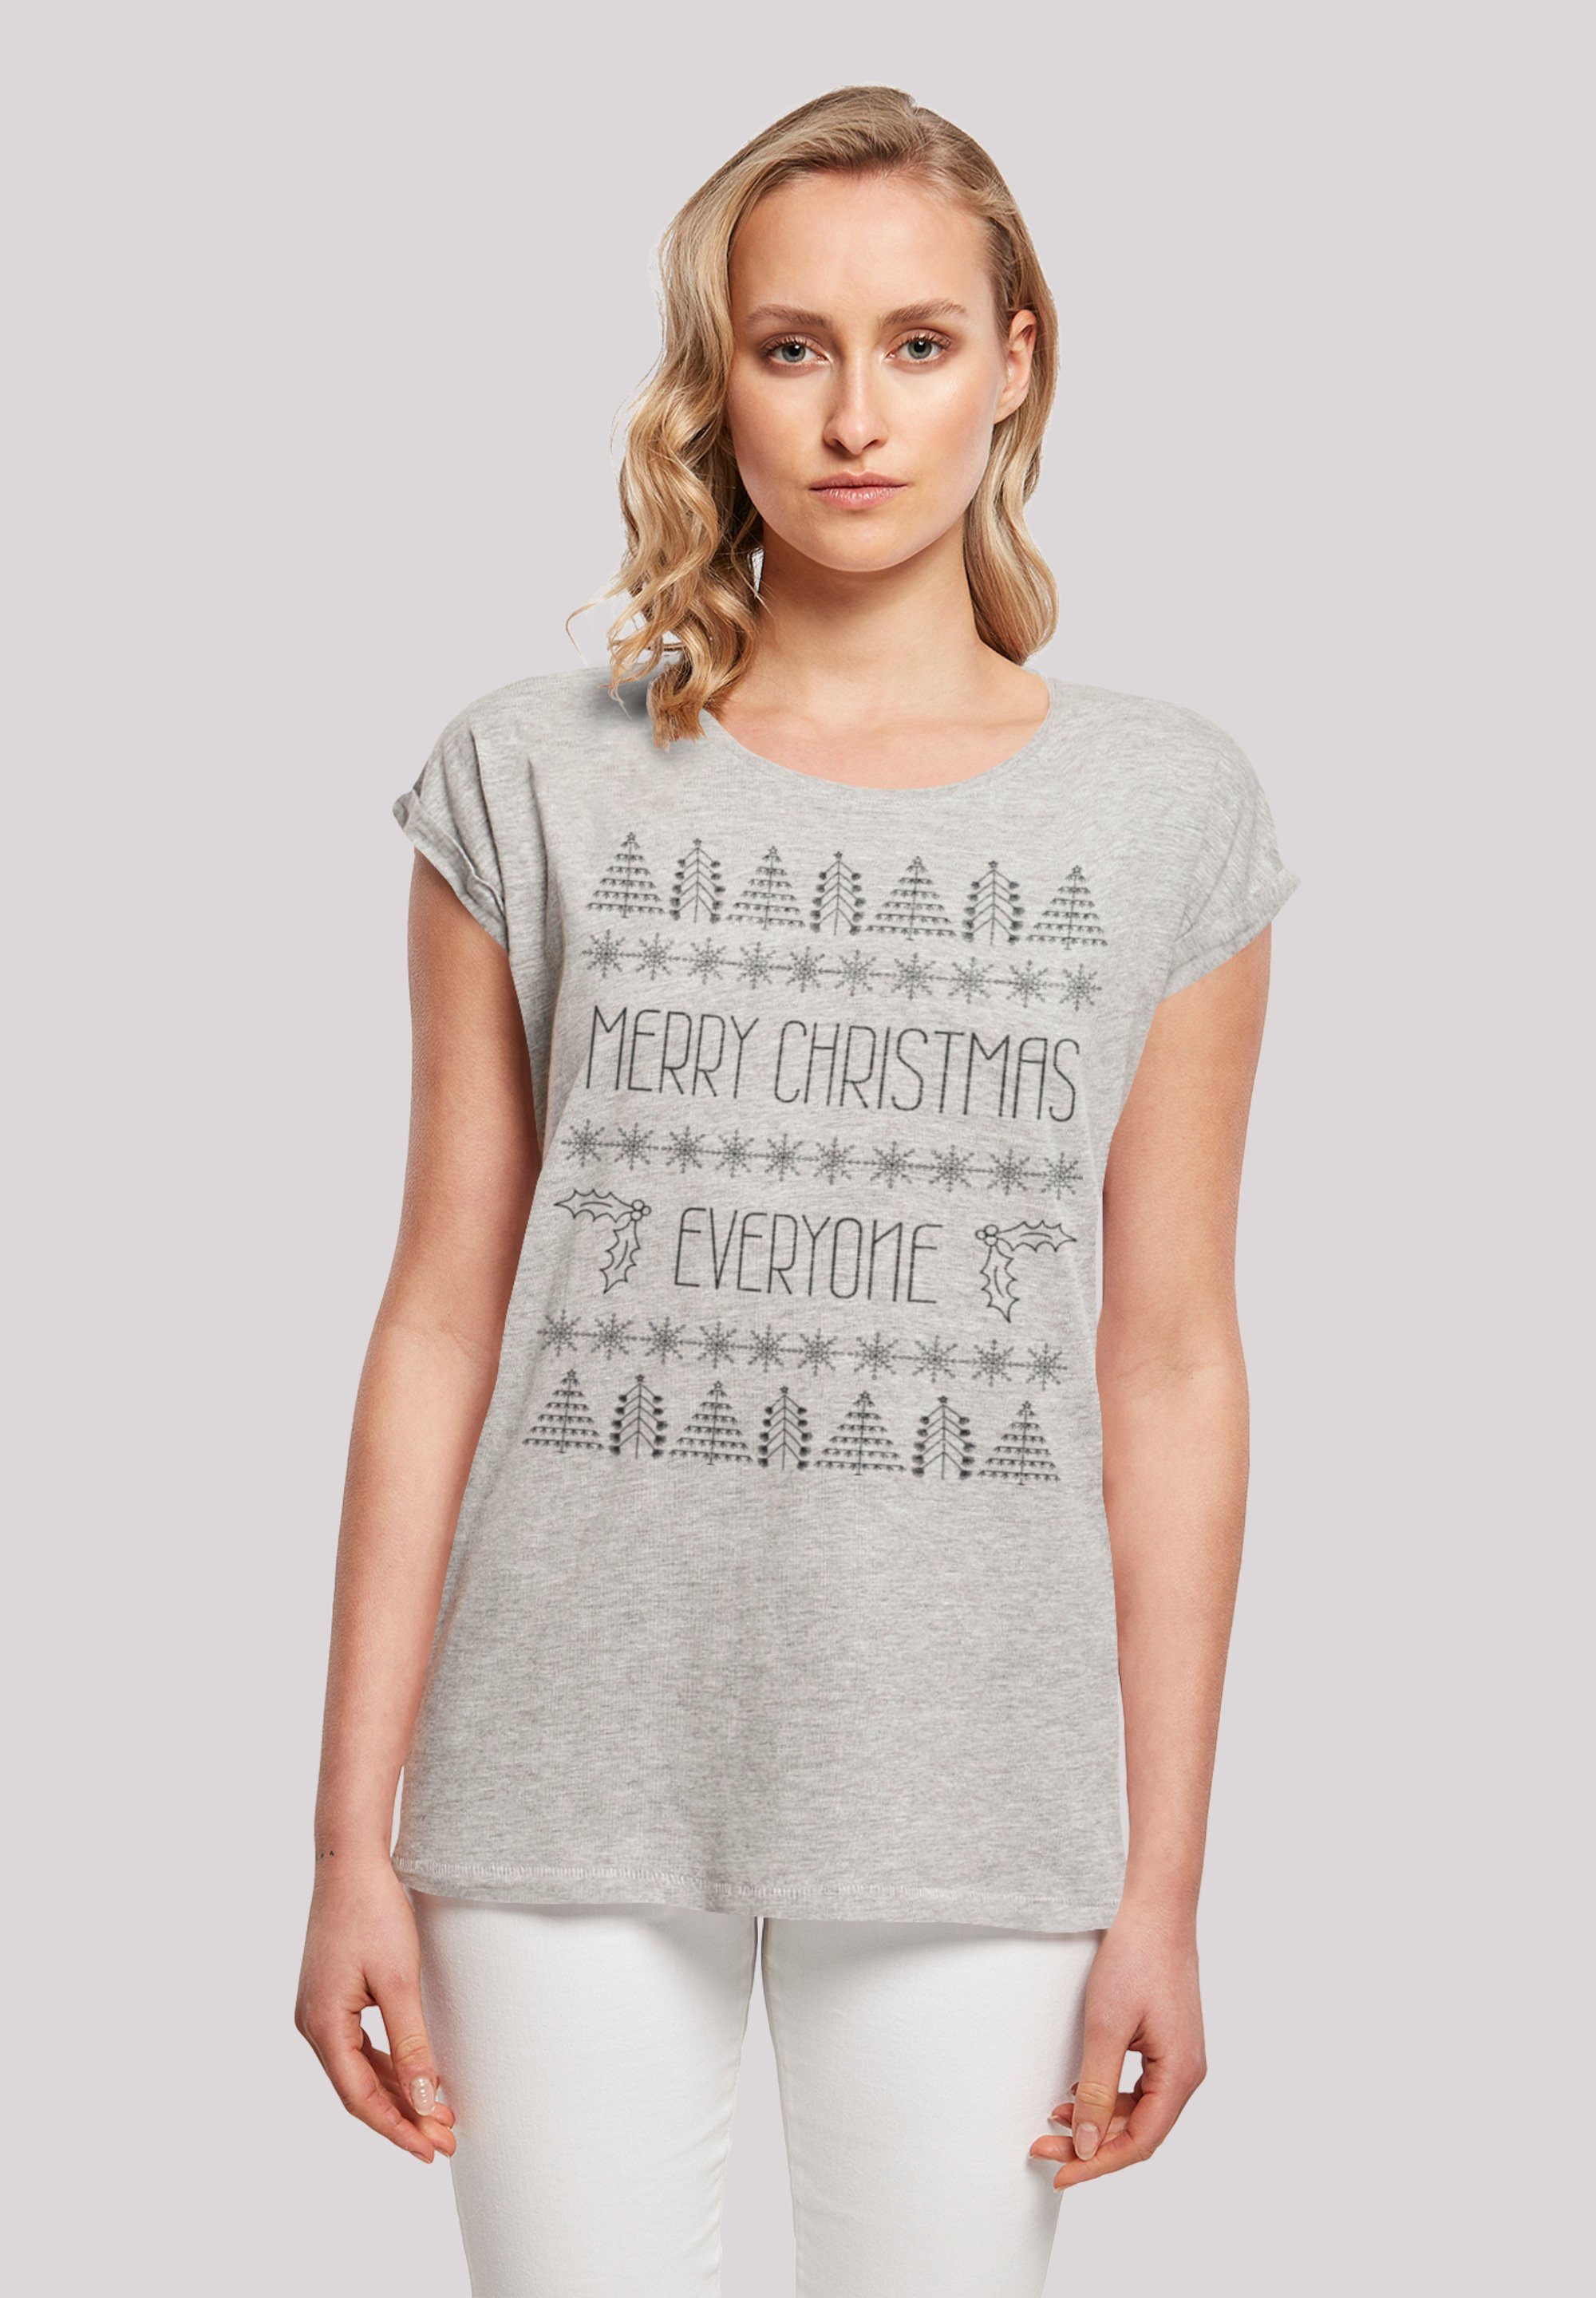 Merry Print Everyone Christmas grey T-Shirt Weihnachten heather F4NT4STIC